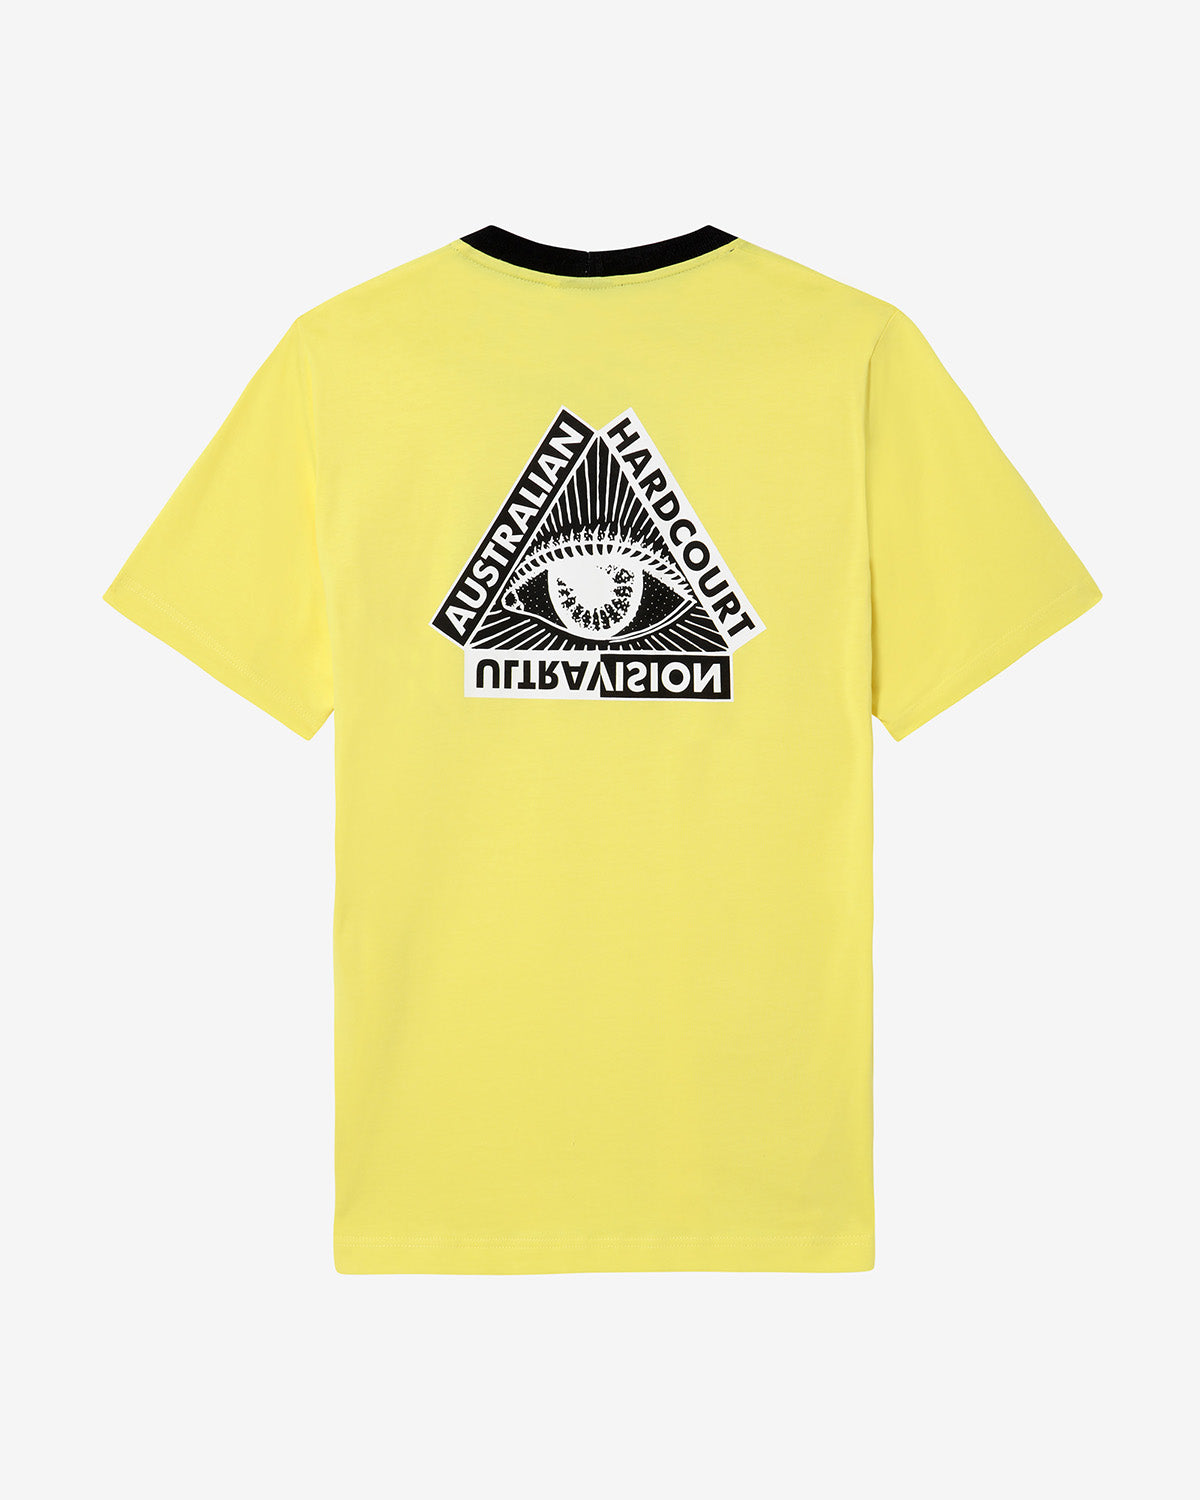 Ultravision T-Shirt: Australian Hard Court